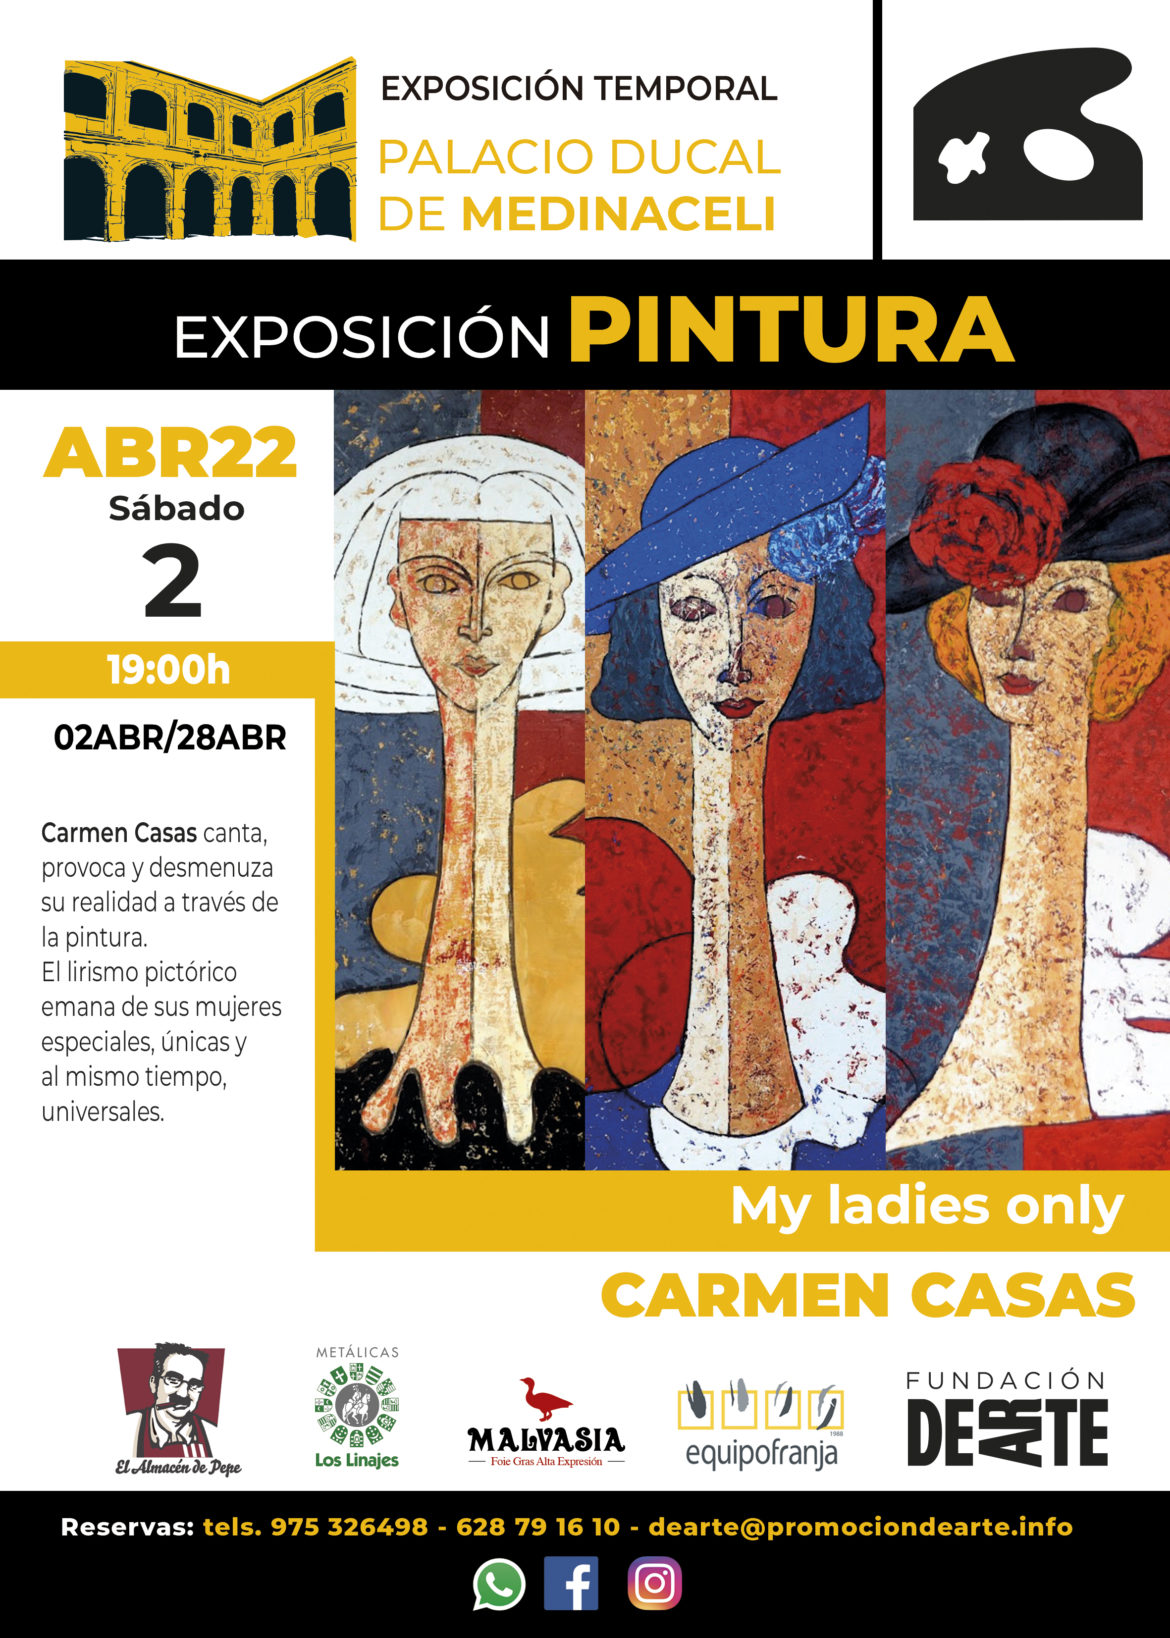 Exposición Temporal de Carmen Casas “My ladies only”